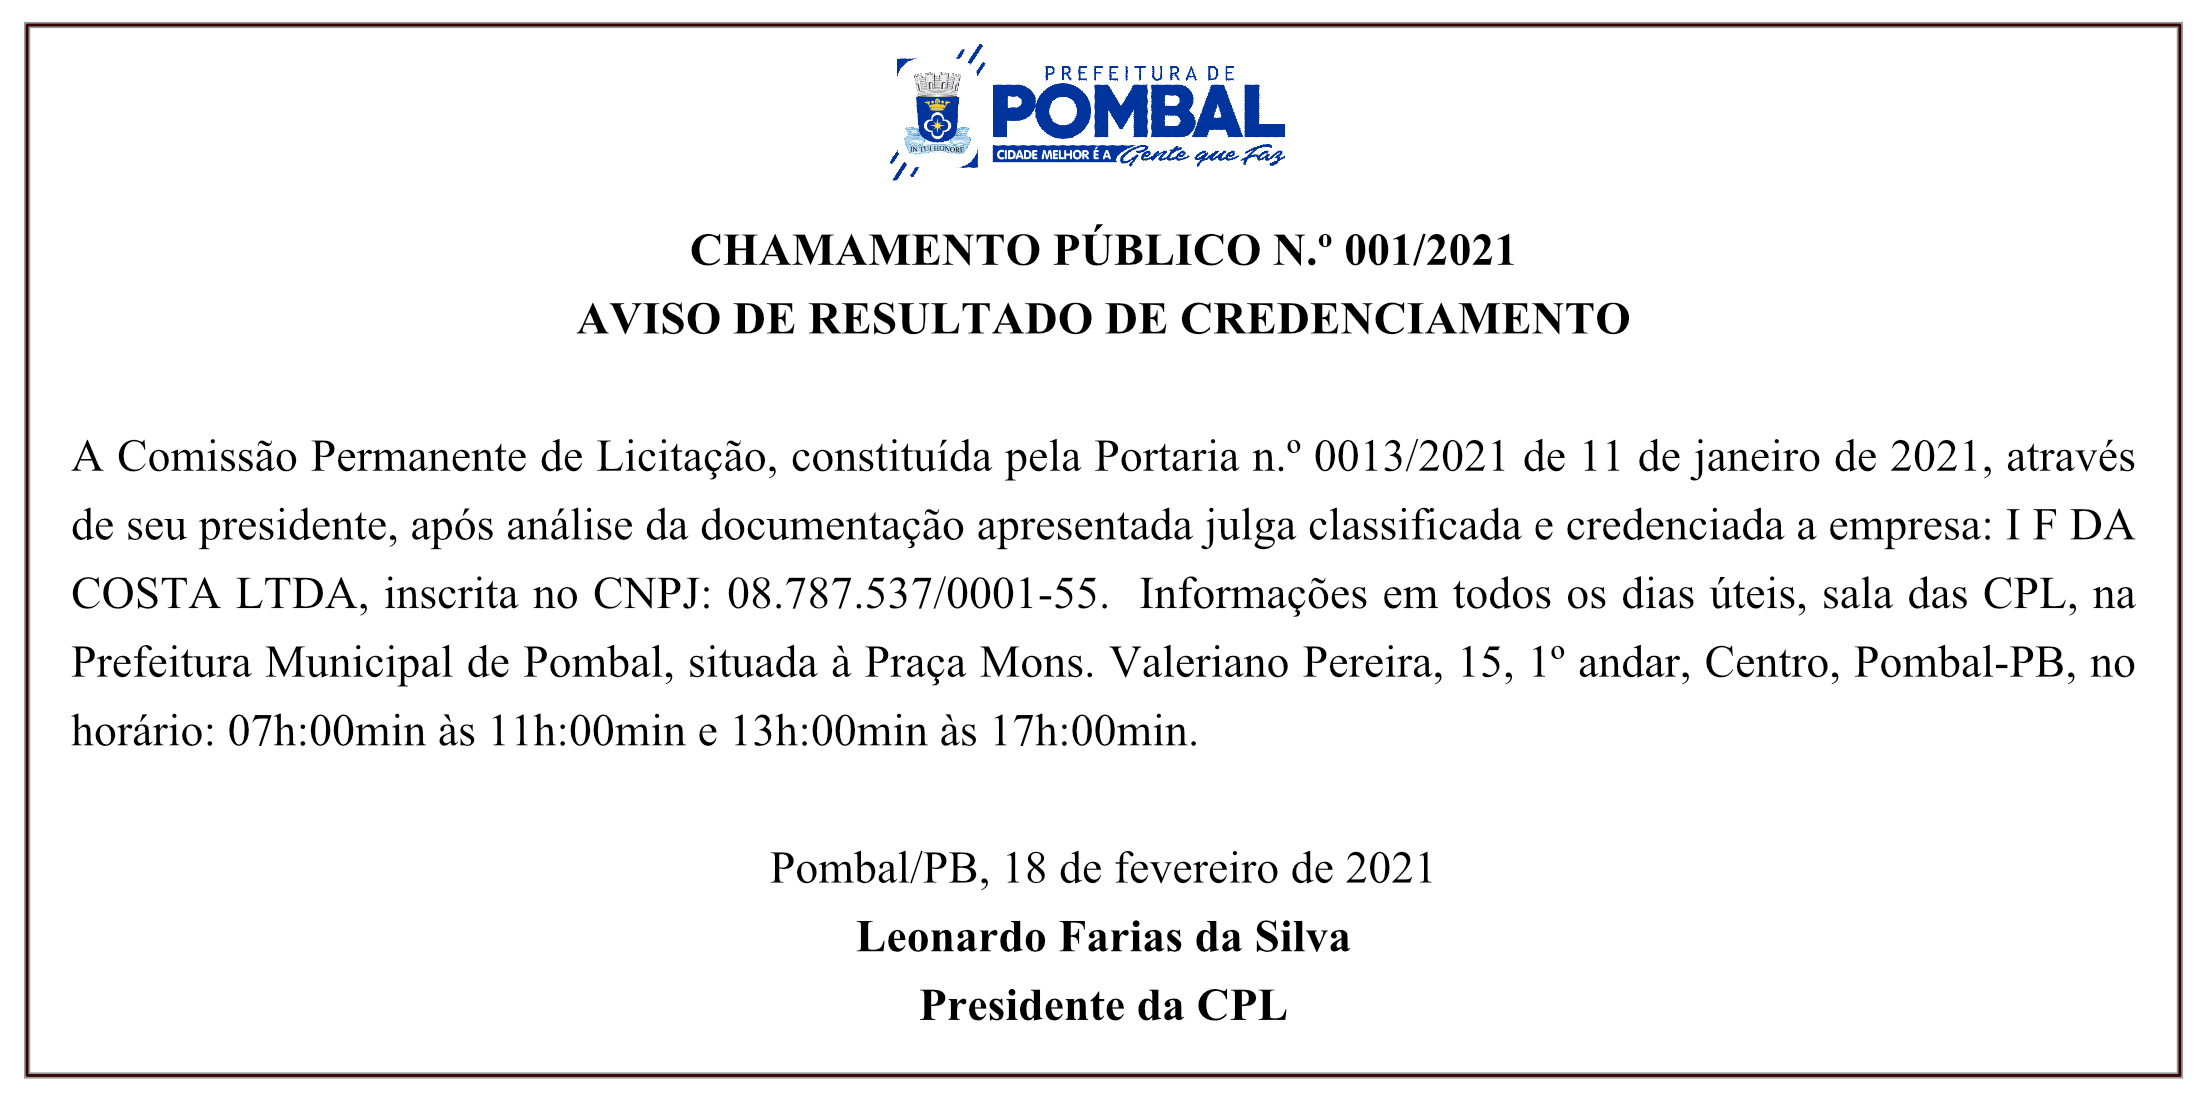 PREFEITURA MUNICIPAL DE POMBAL – CHAMAMENTO PÚBLICO N.º 001/2021 – AVISO DE RESULTADO DE CREDENCIAMENTO